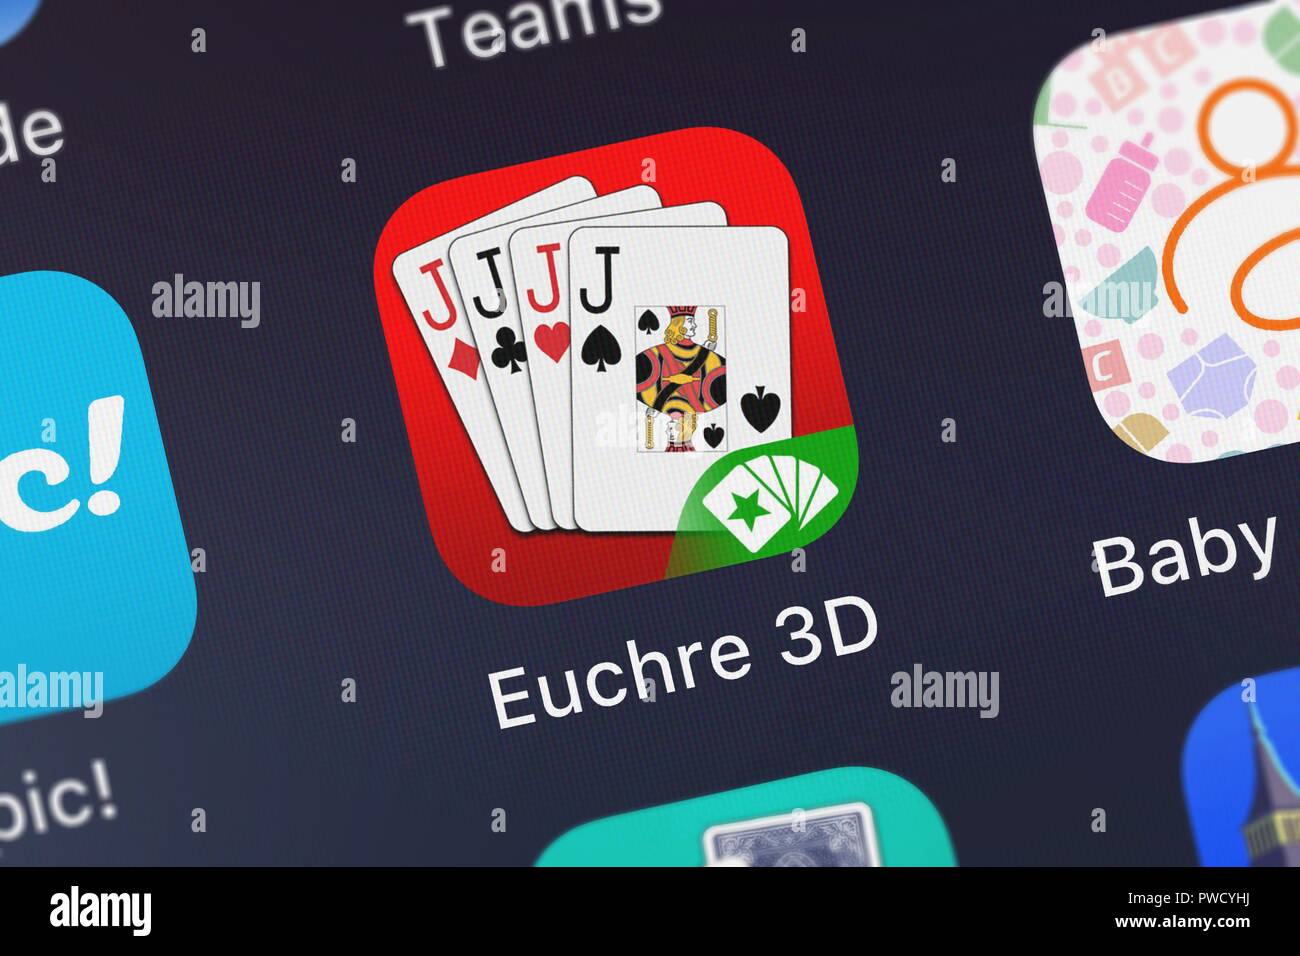 3d brain app for iphone